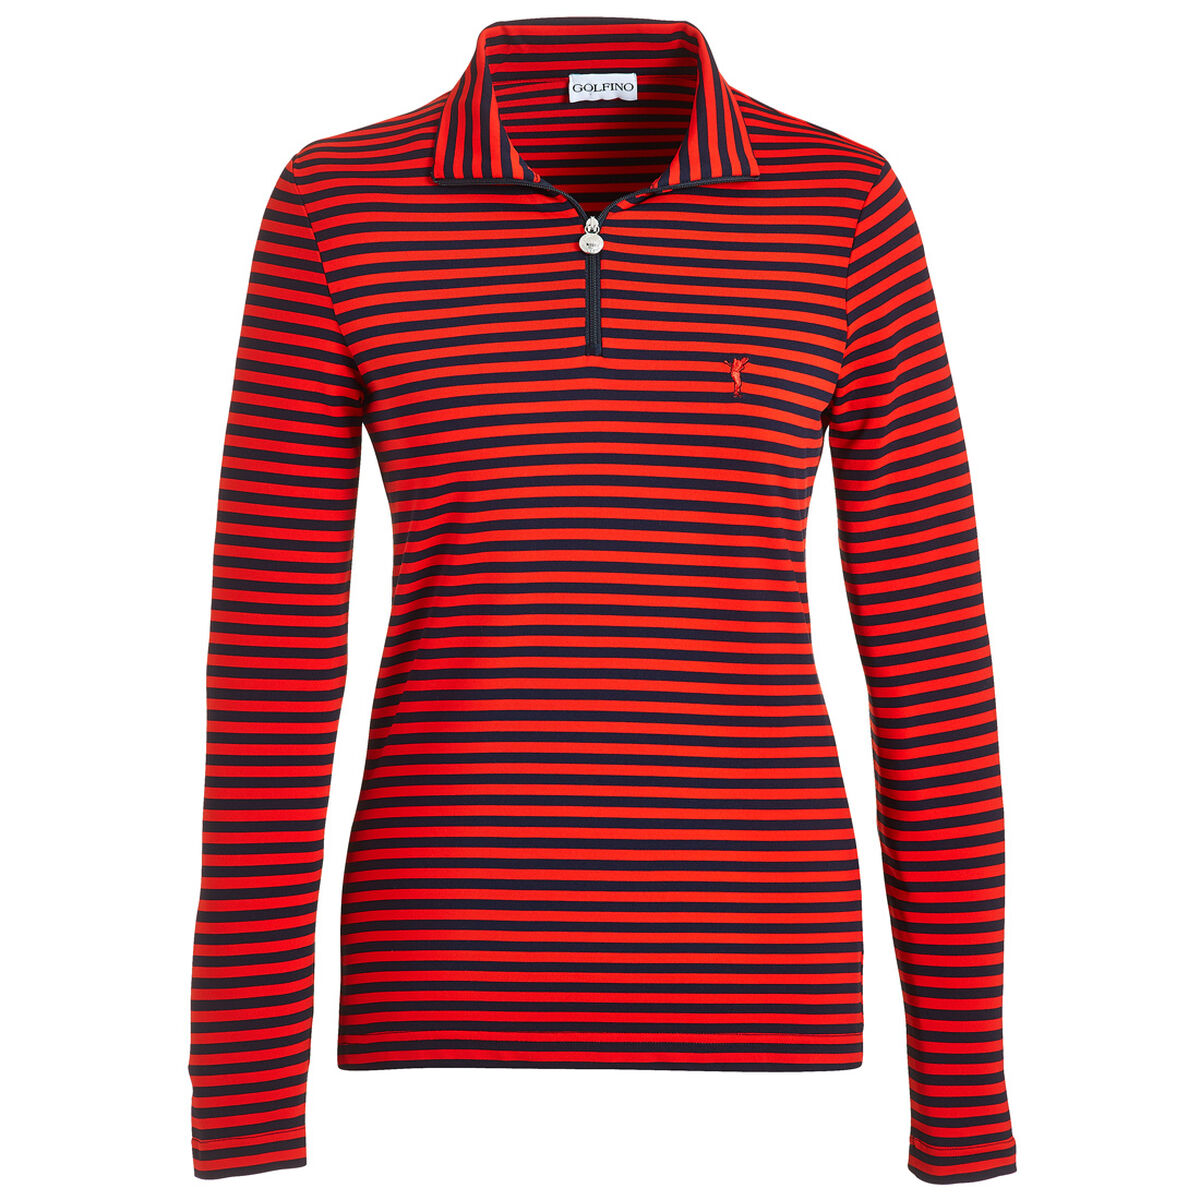 Polo GOLFINO Dry Comfort Long Sleeve pour femme, femme, 6, Rouge | Online Golf